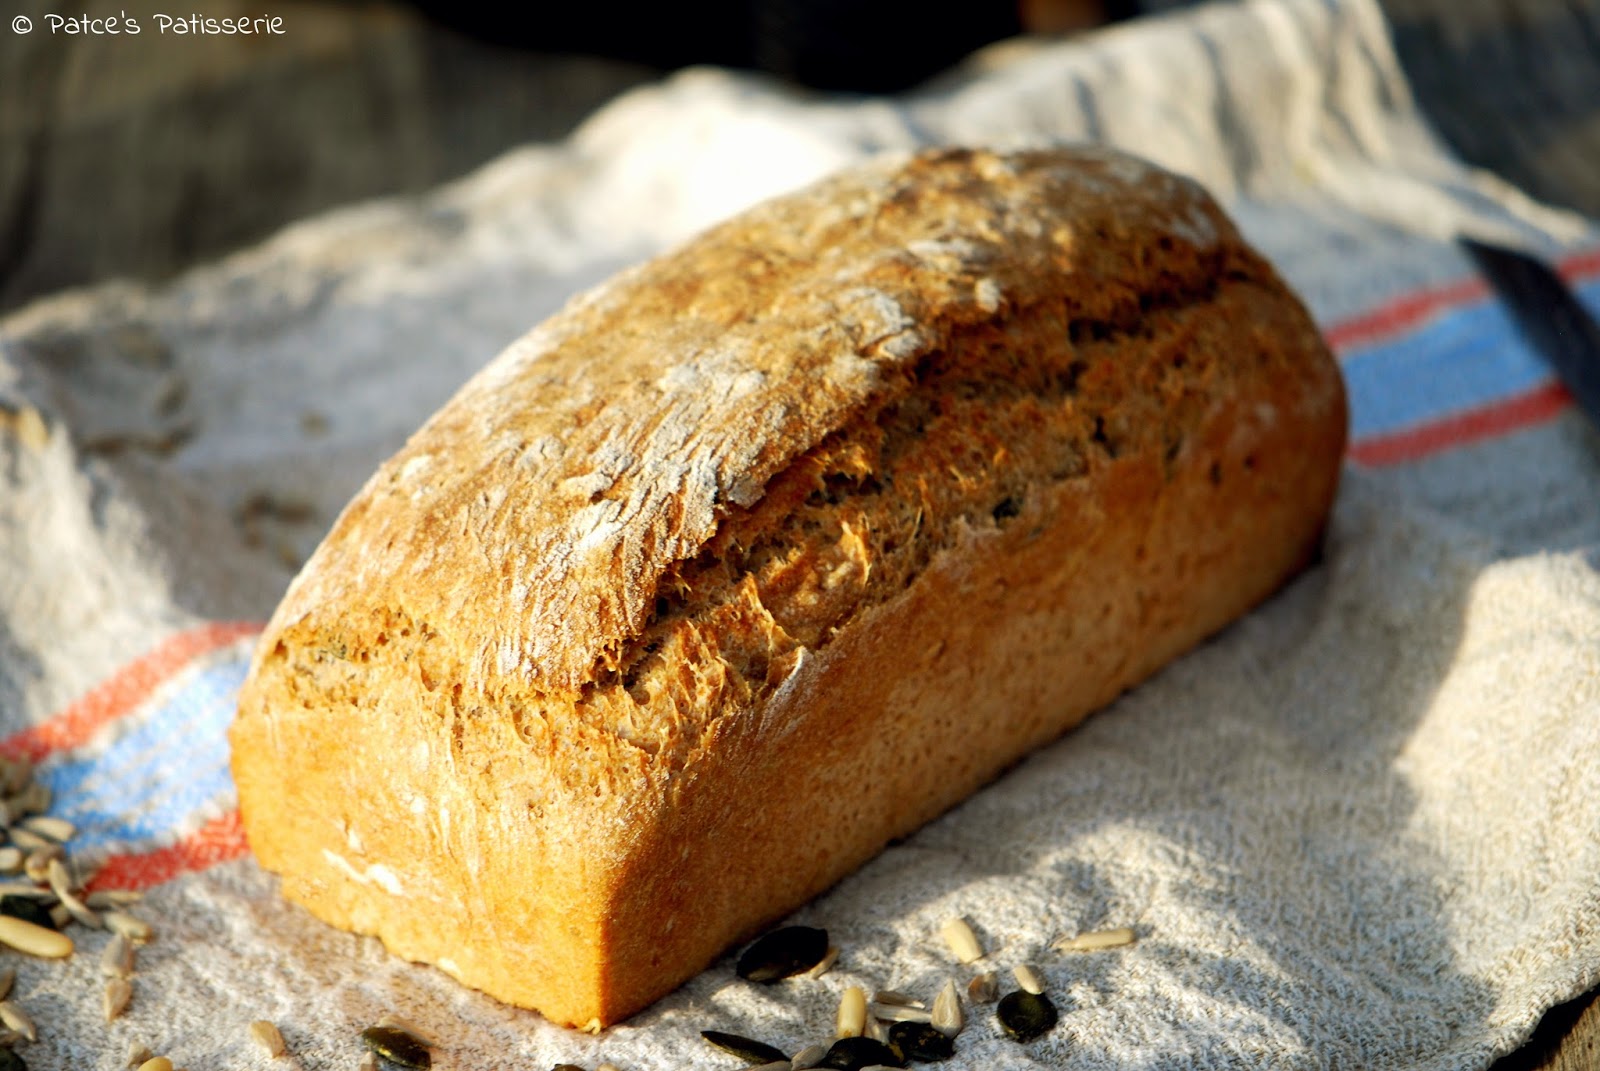 Patces Patisserie: So einfach geht Brot backen: Mehrkornbrot